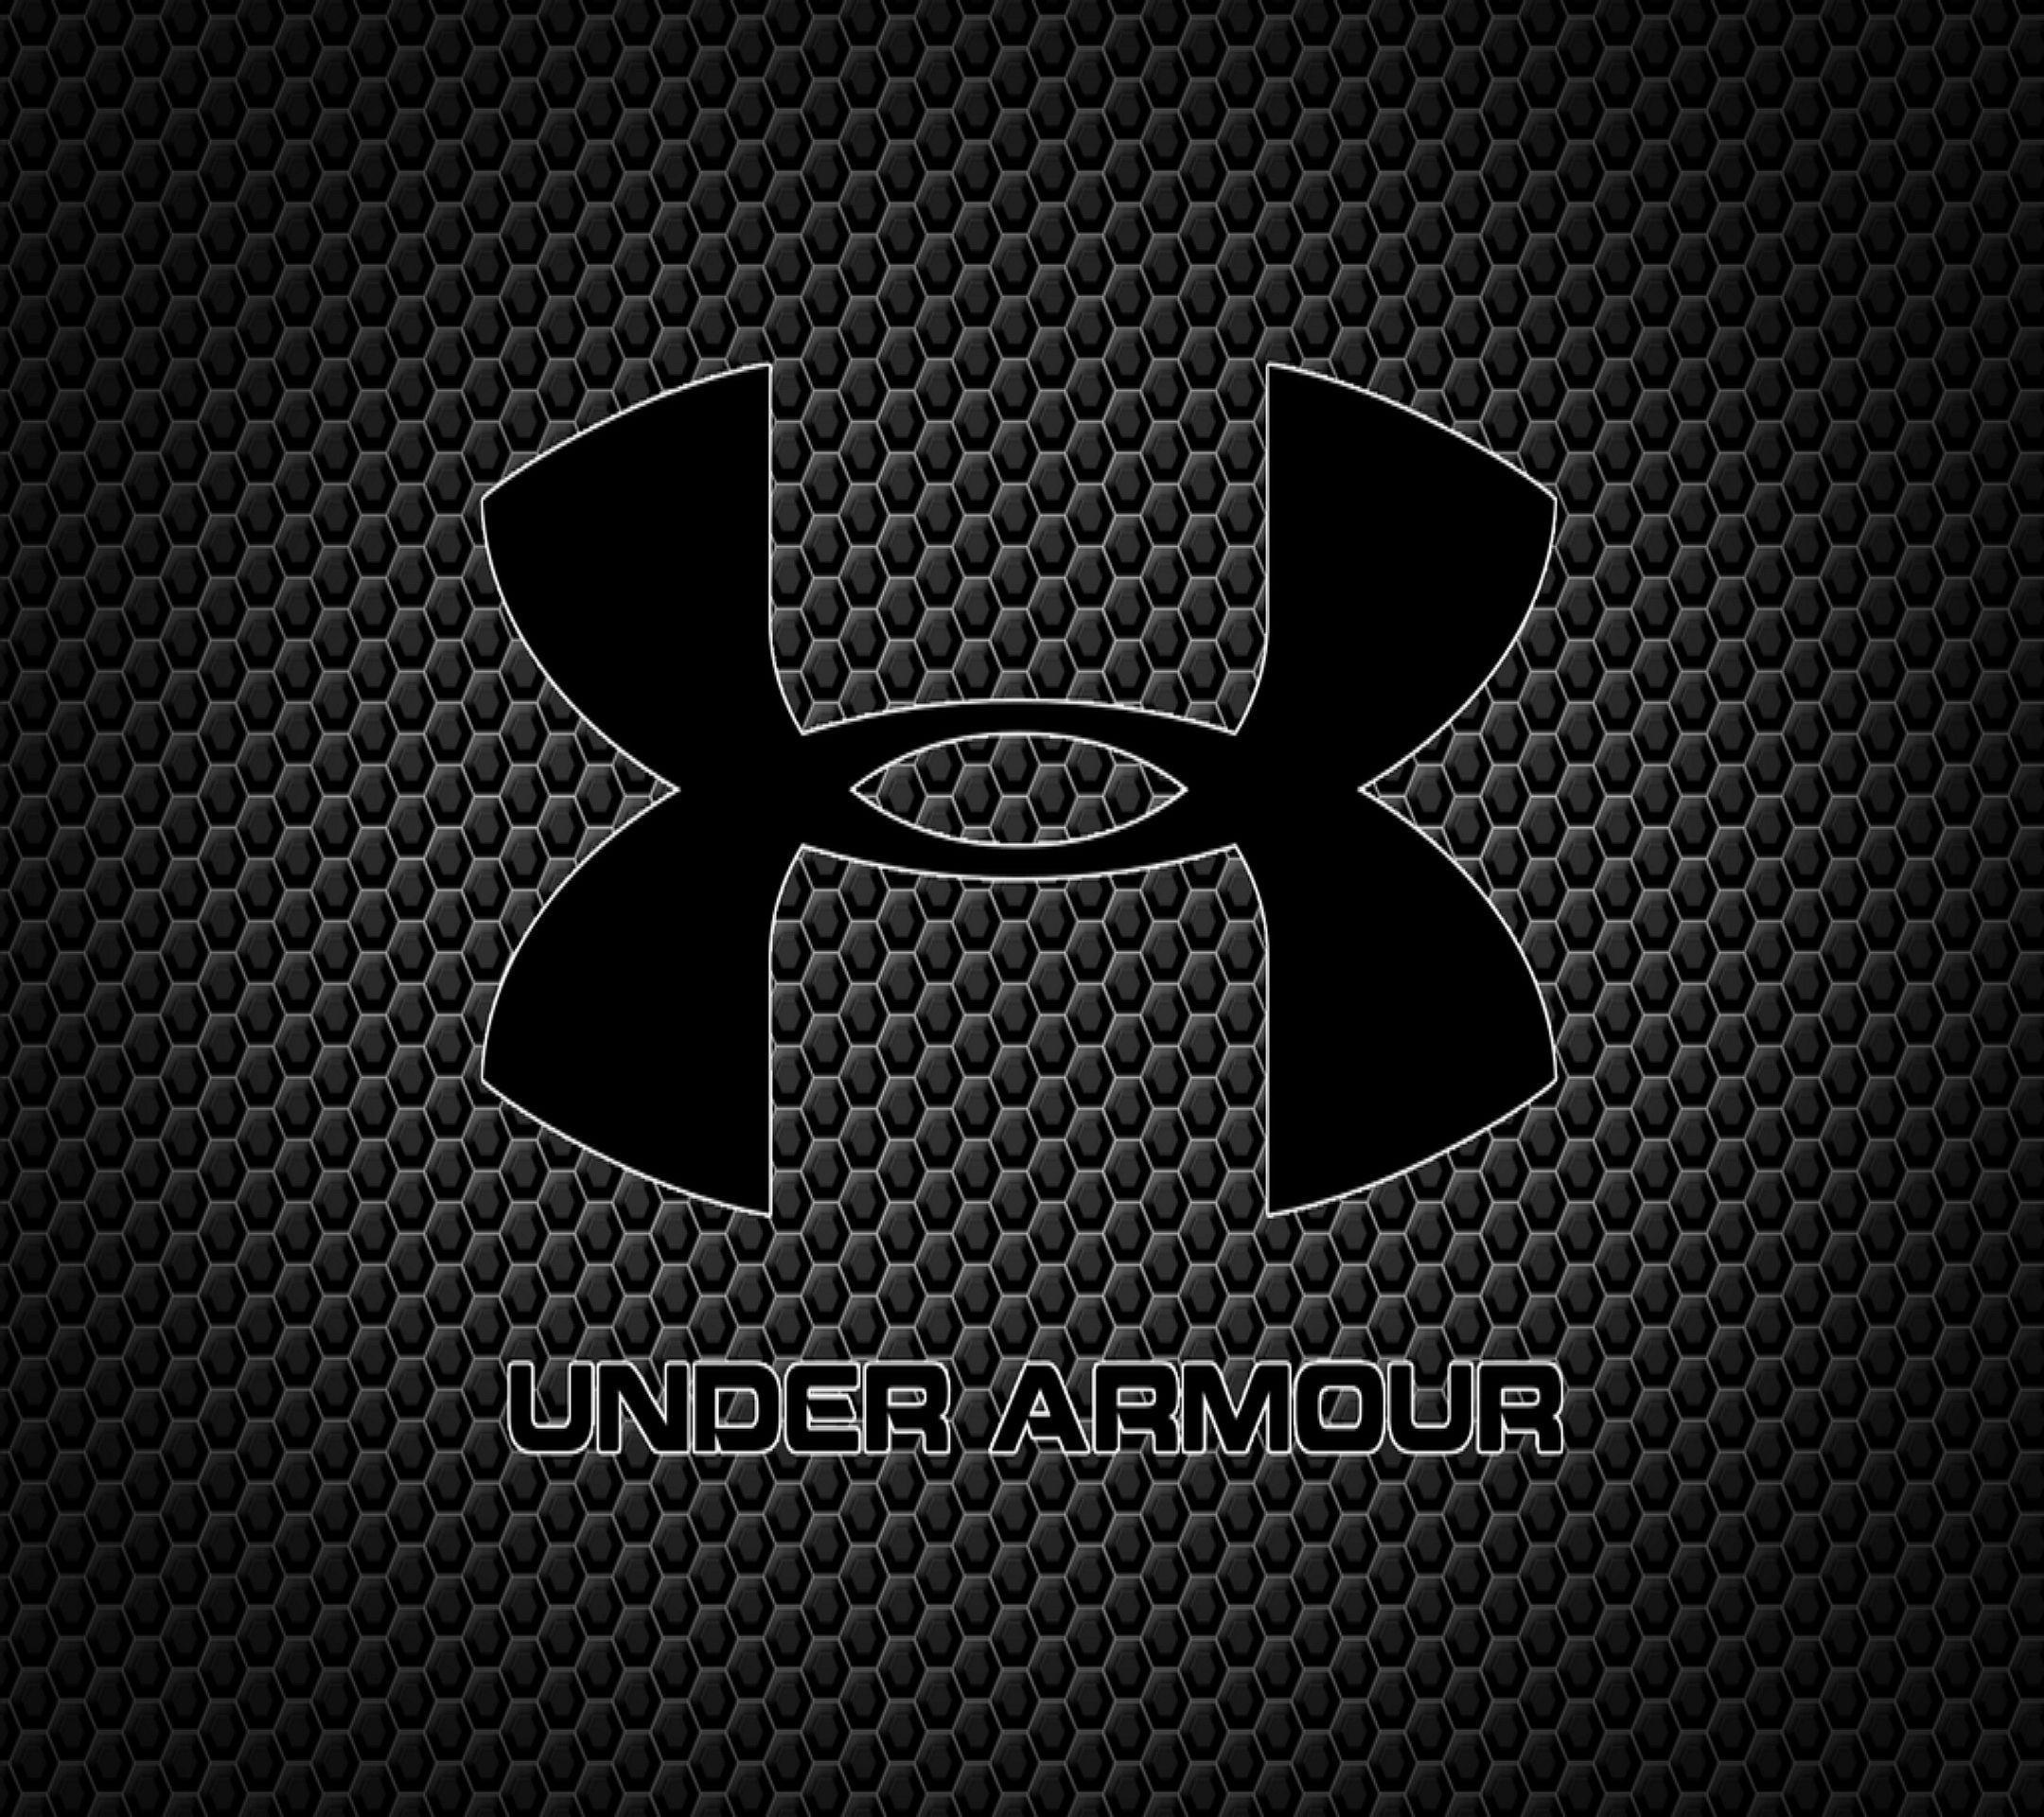 Under Armour logo wallpaper